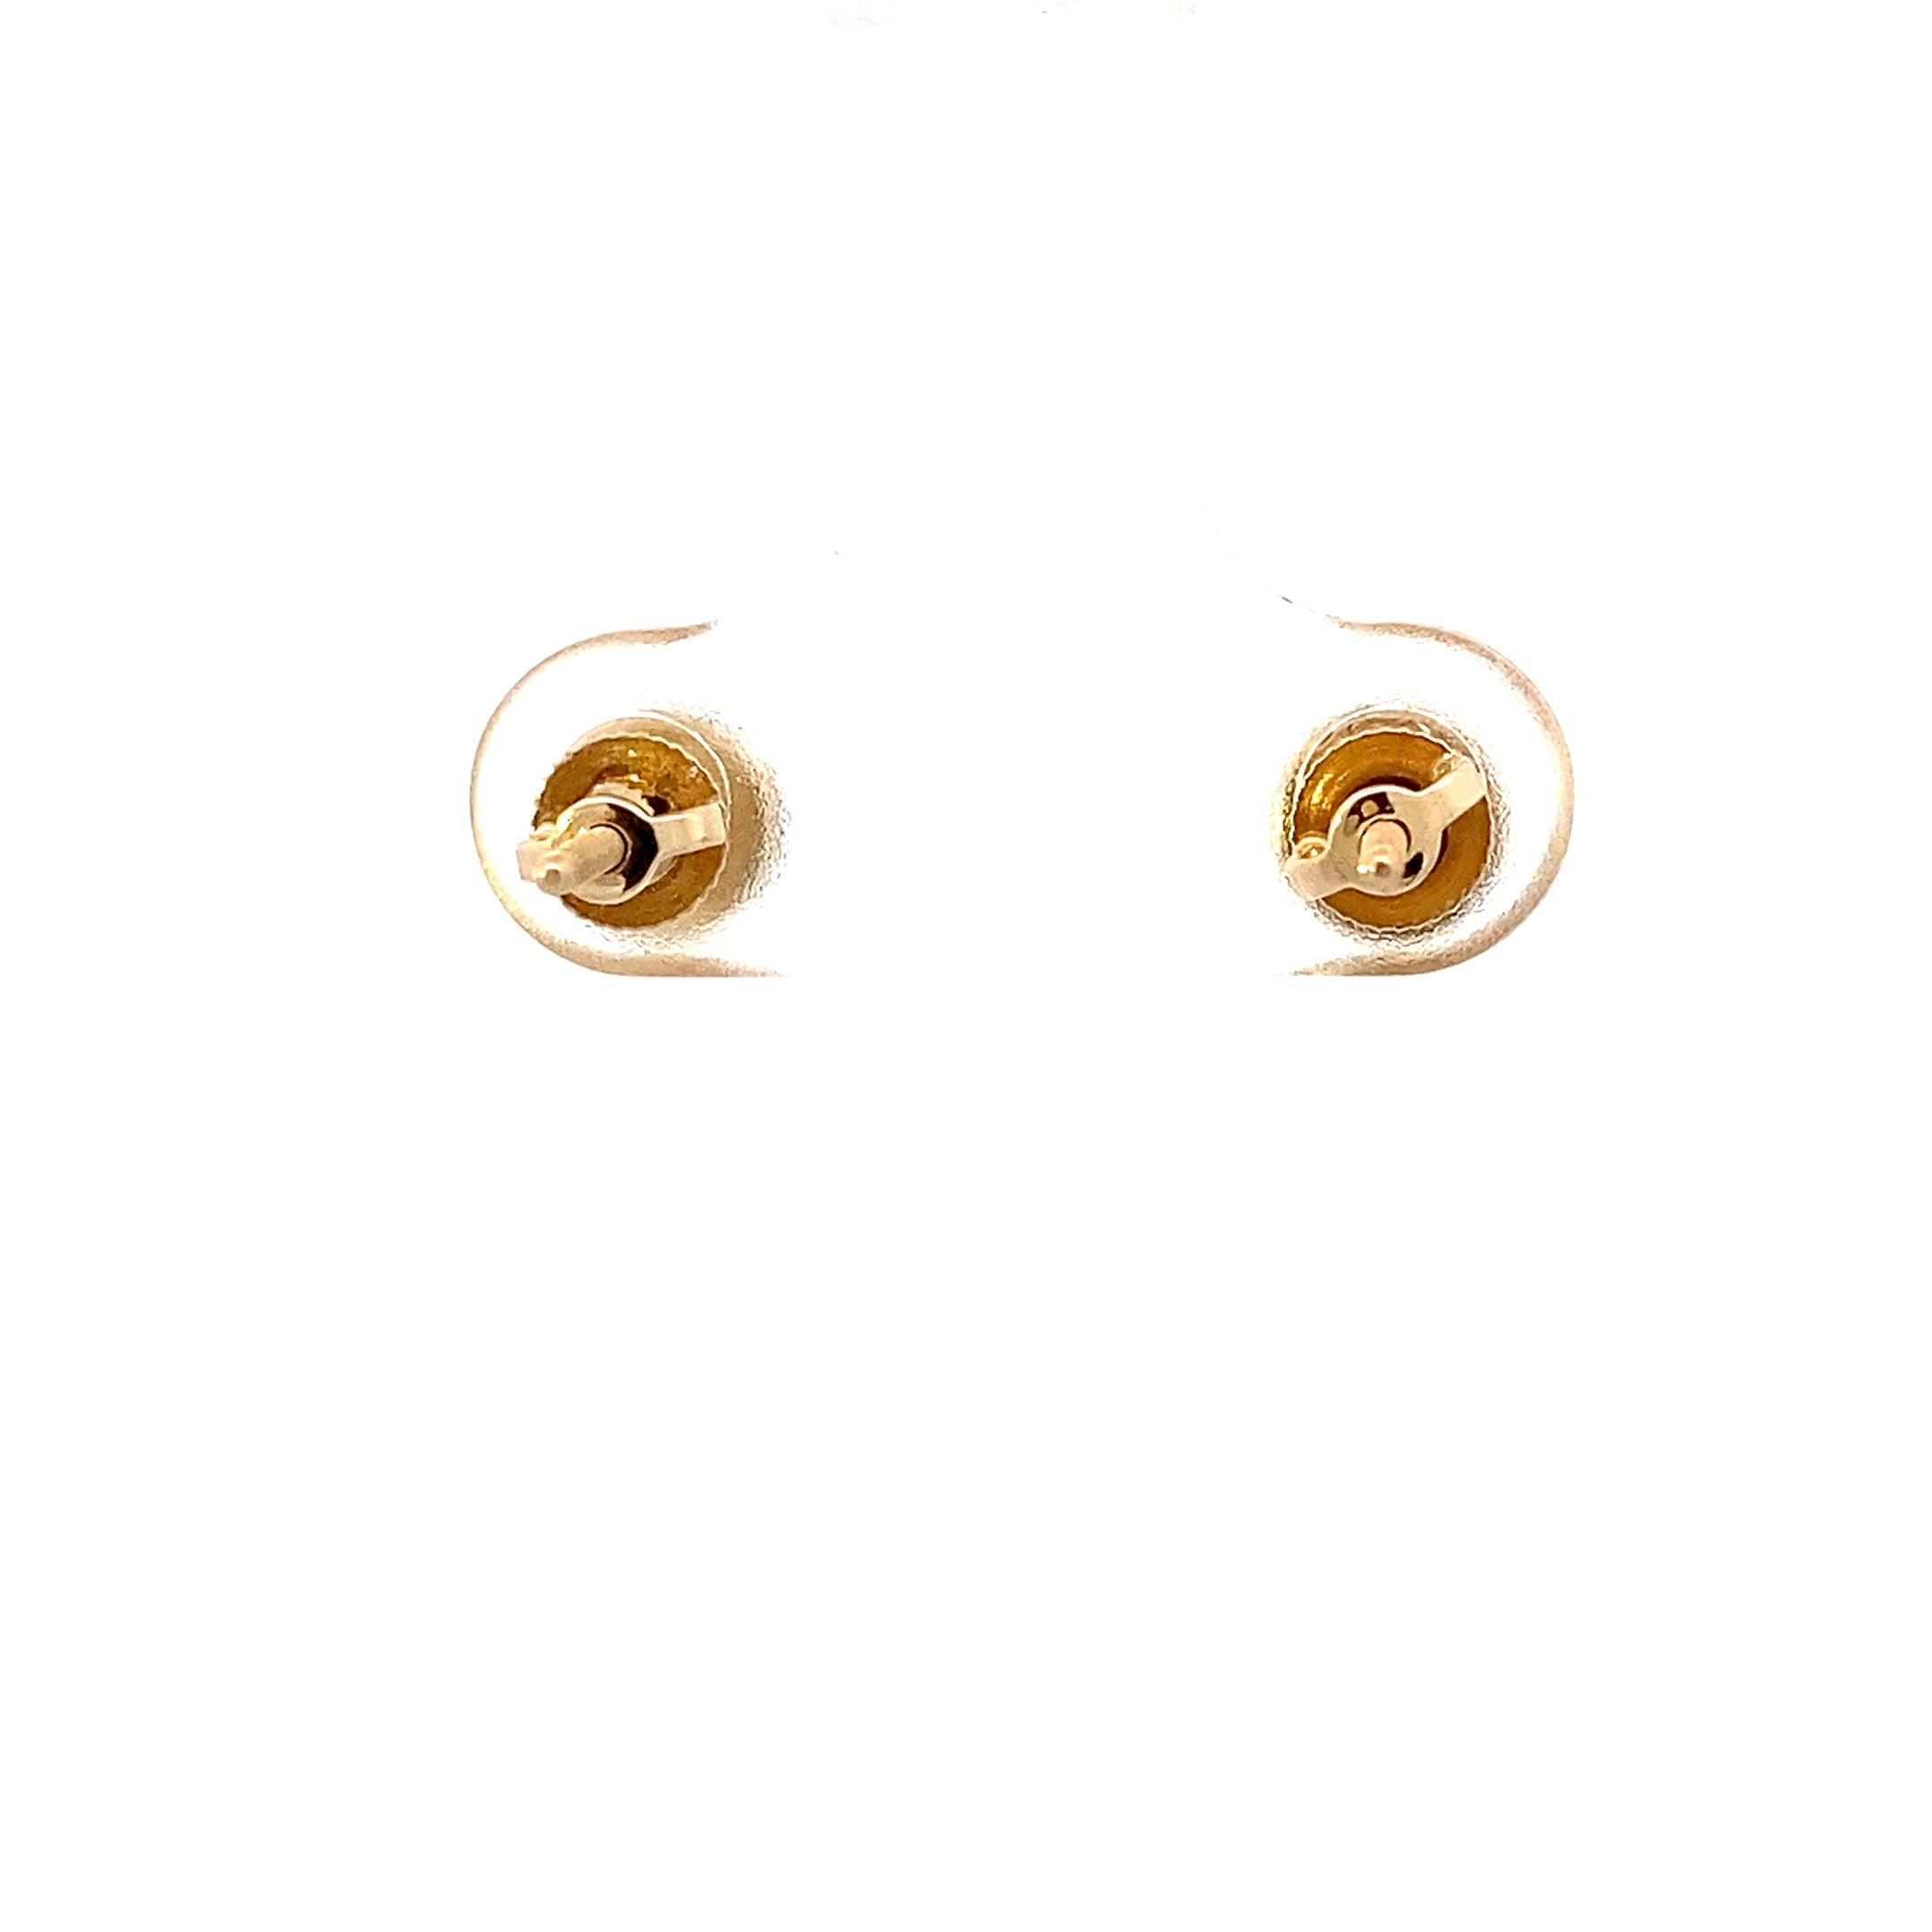 New 10K Yellow Gold Diamond Stud Earrings - 0.07ct